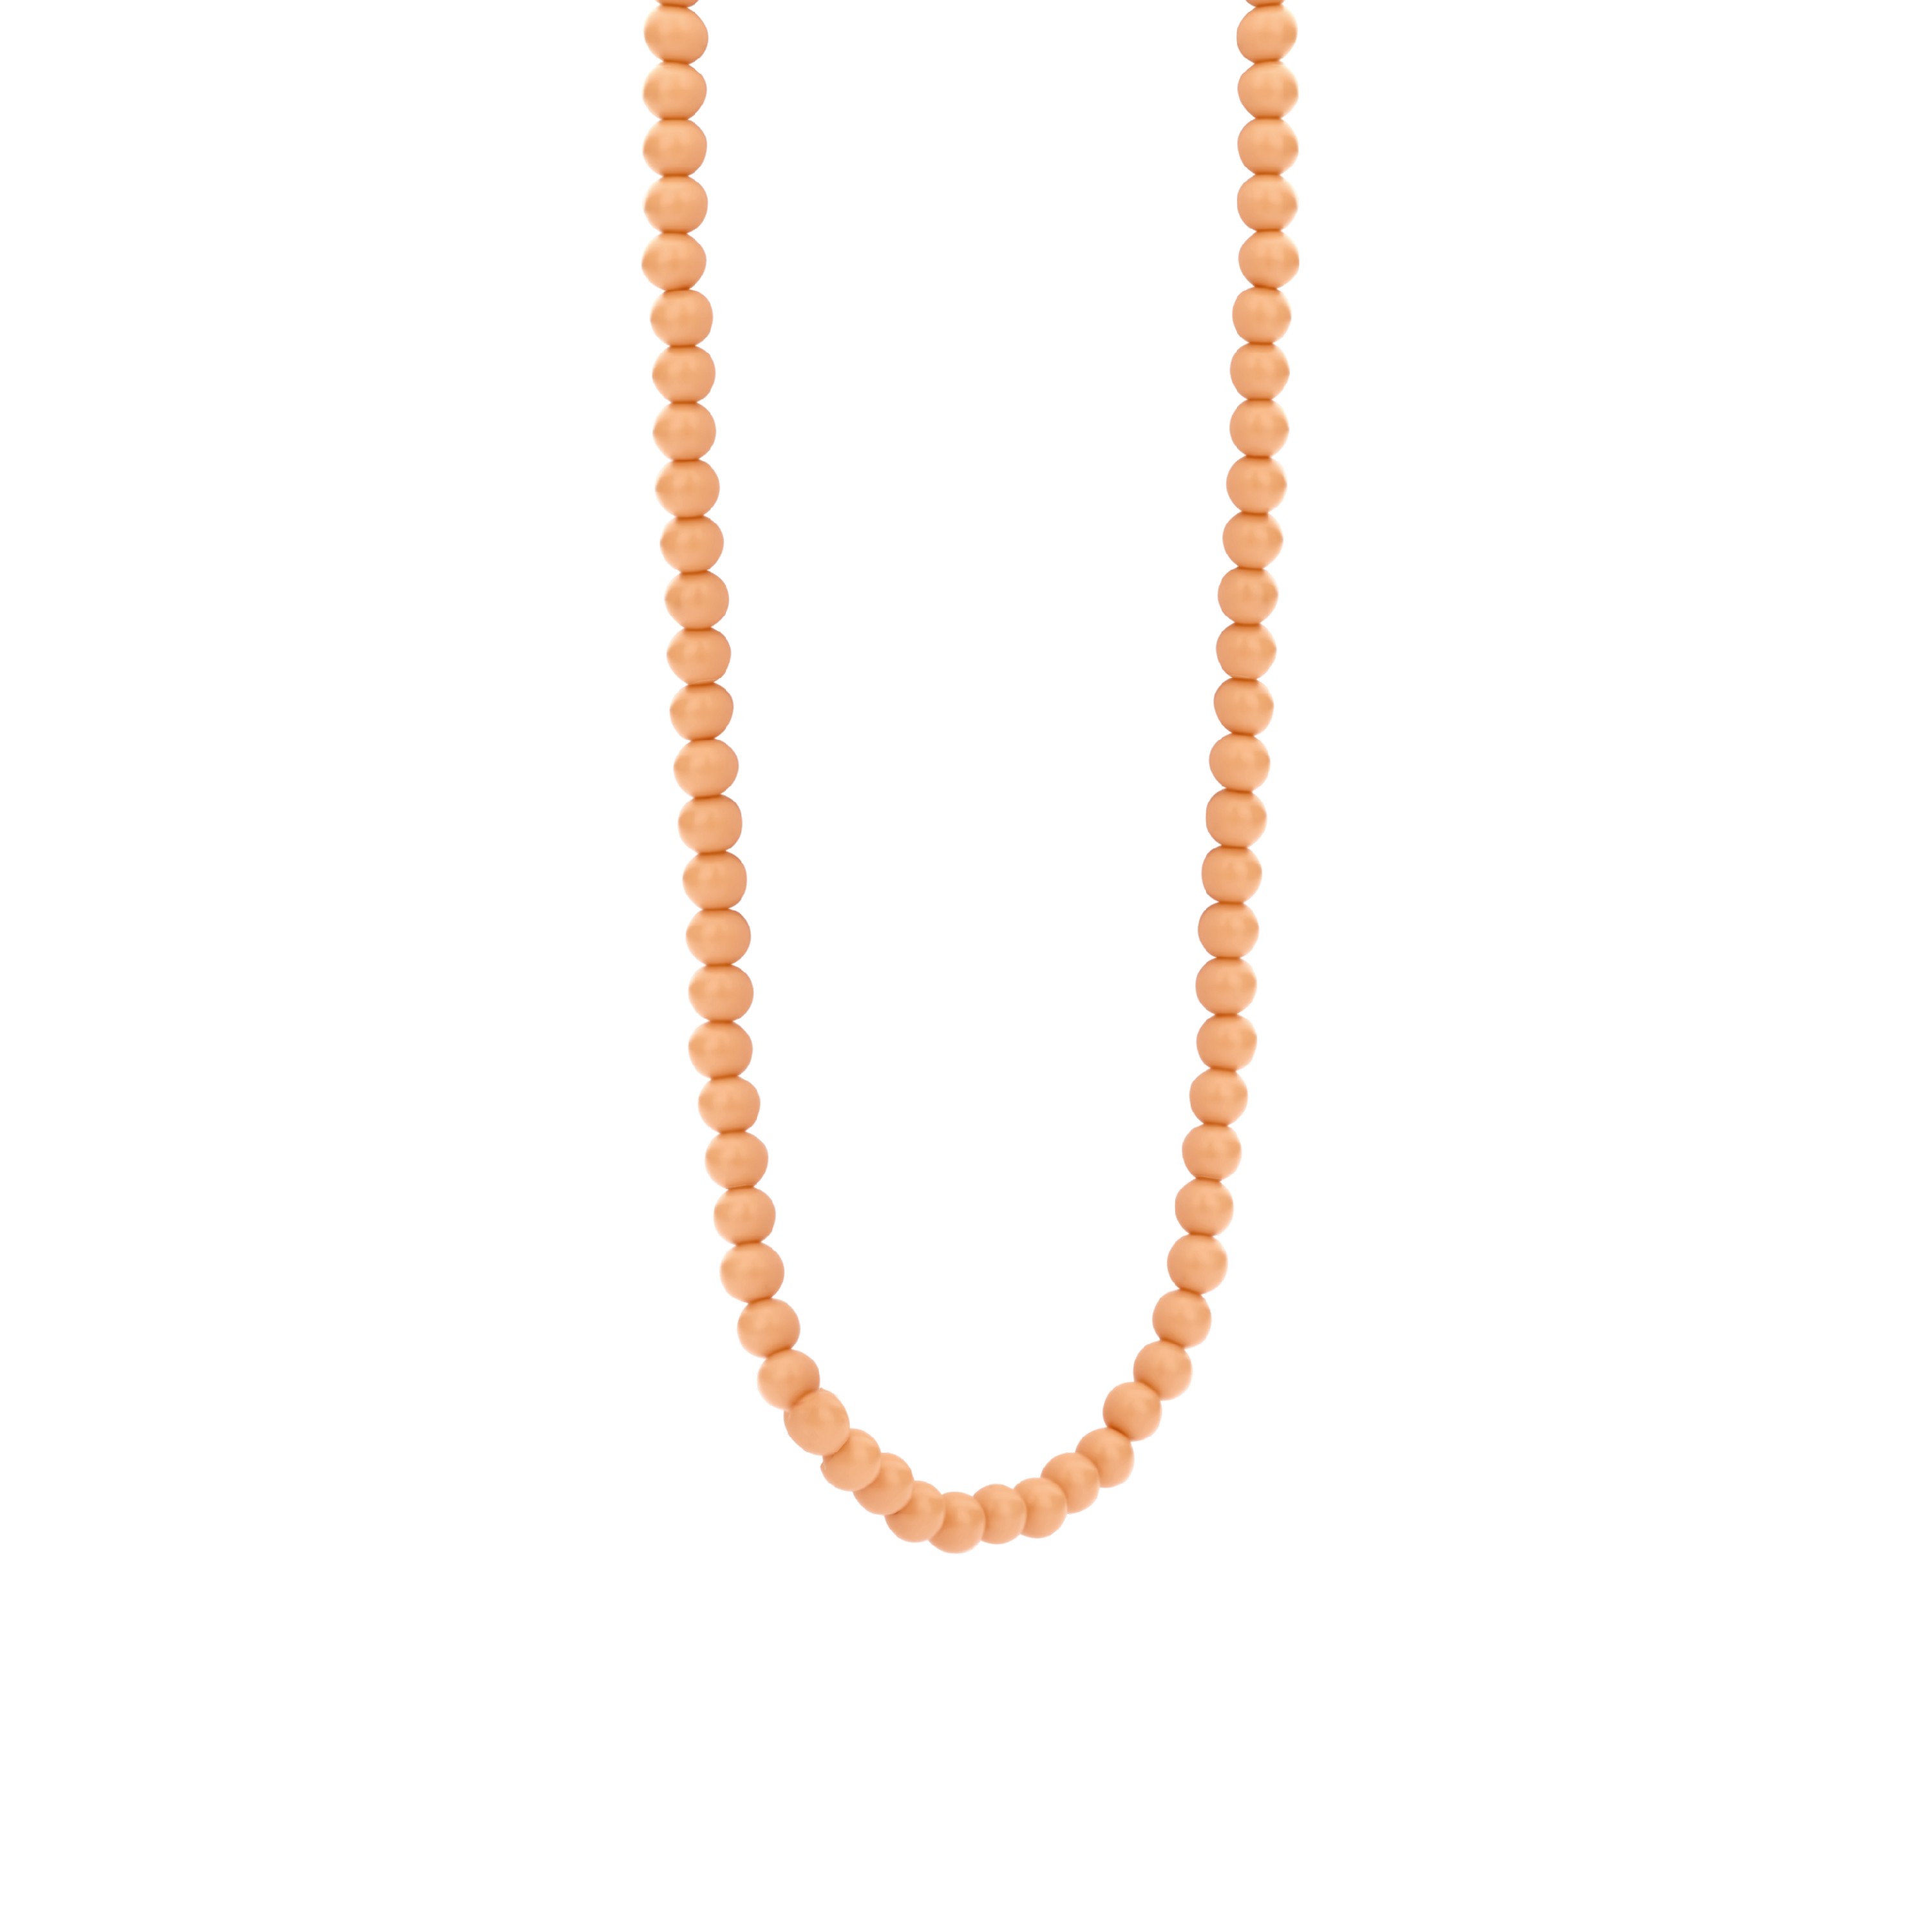 TI SENTO - Milano Necklace 3916CP Gala Jewelers Inc. White Oak, PA